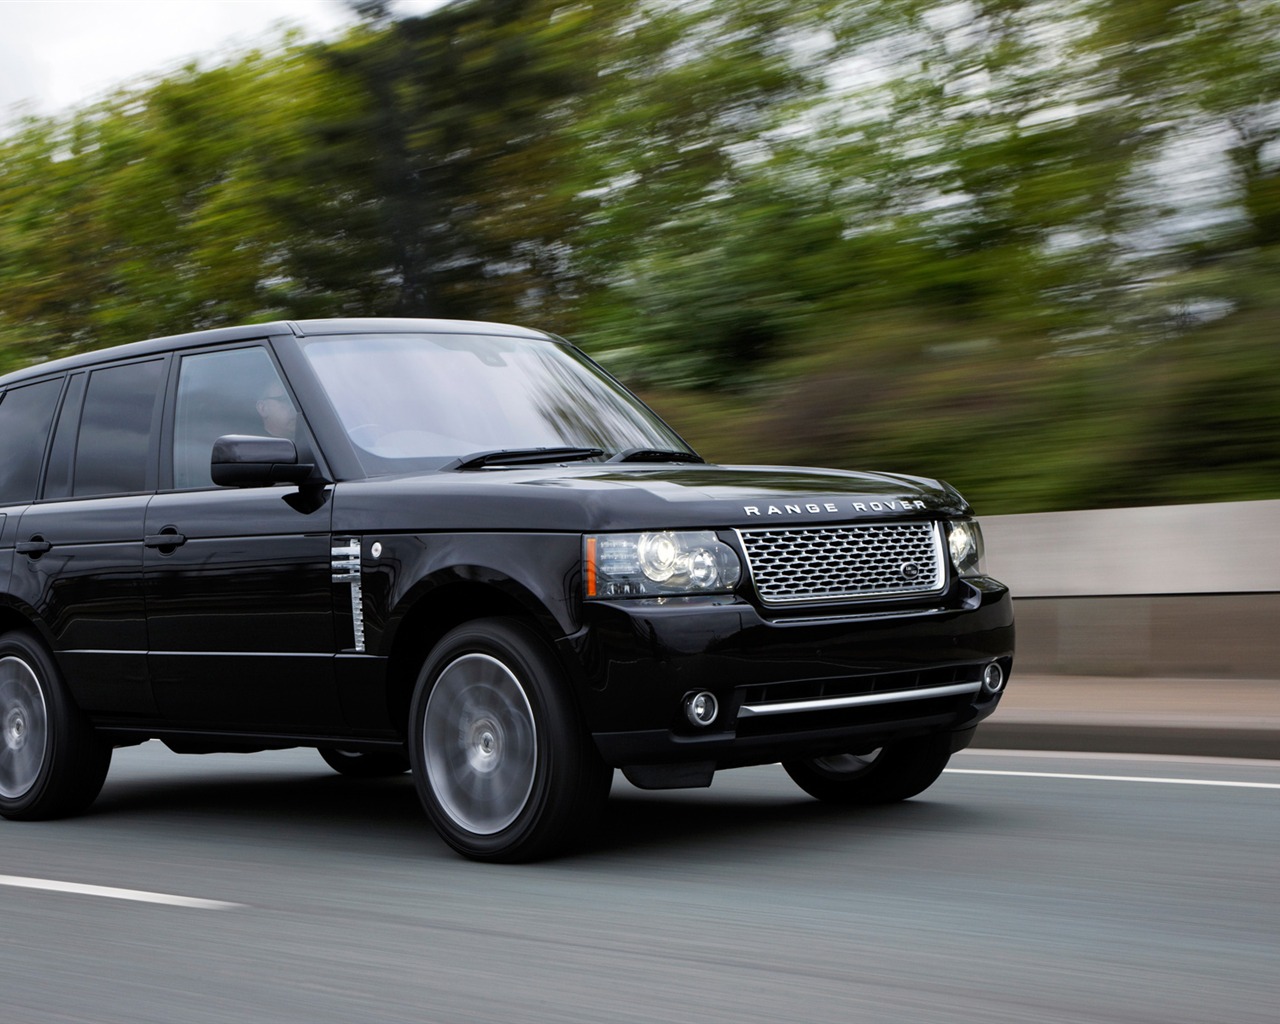 Land Rover Range Rover Black Edition - 2011 路虎16 - 1280x1024